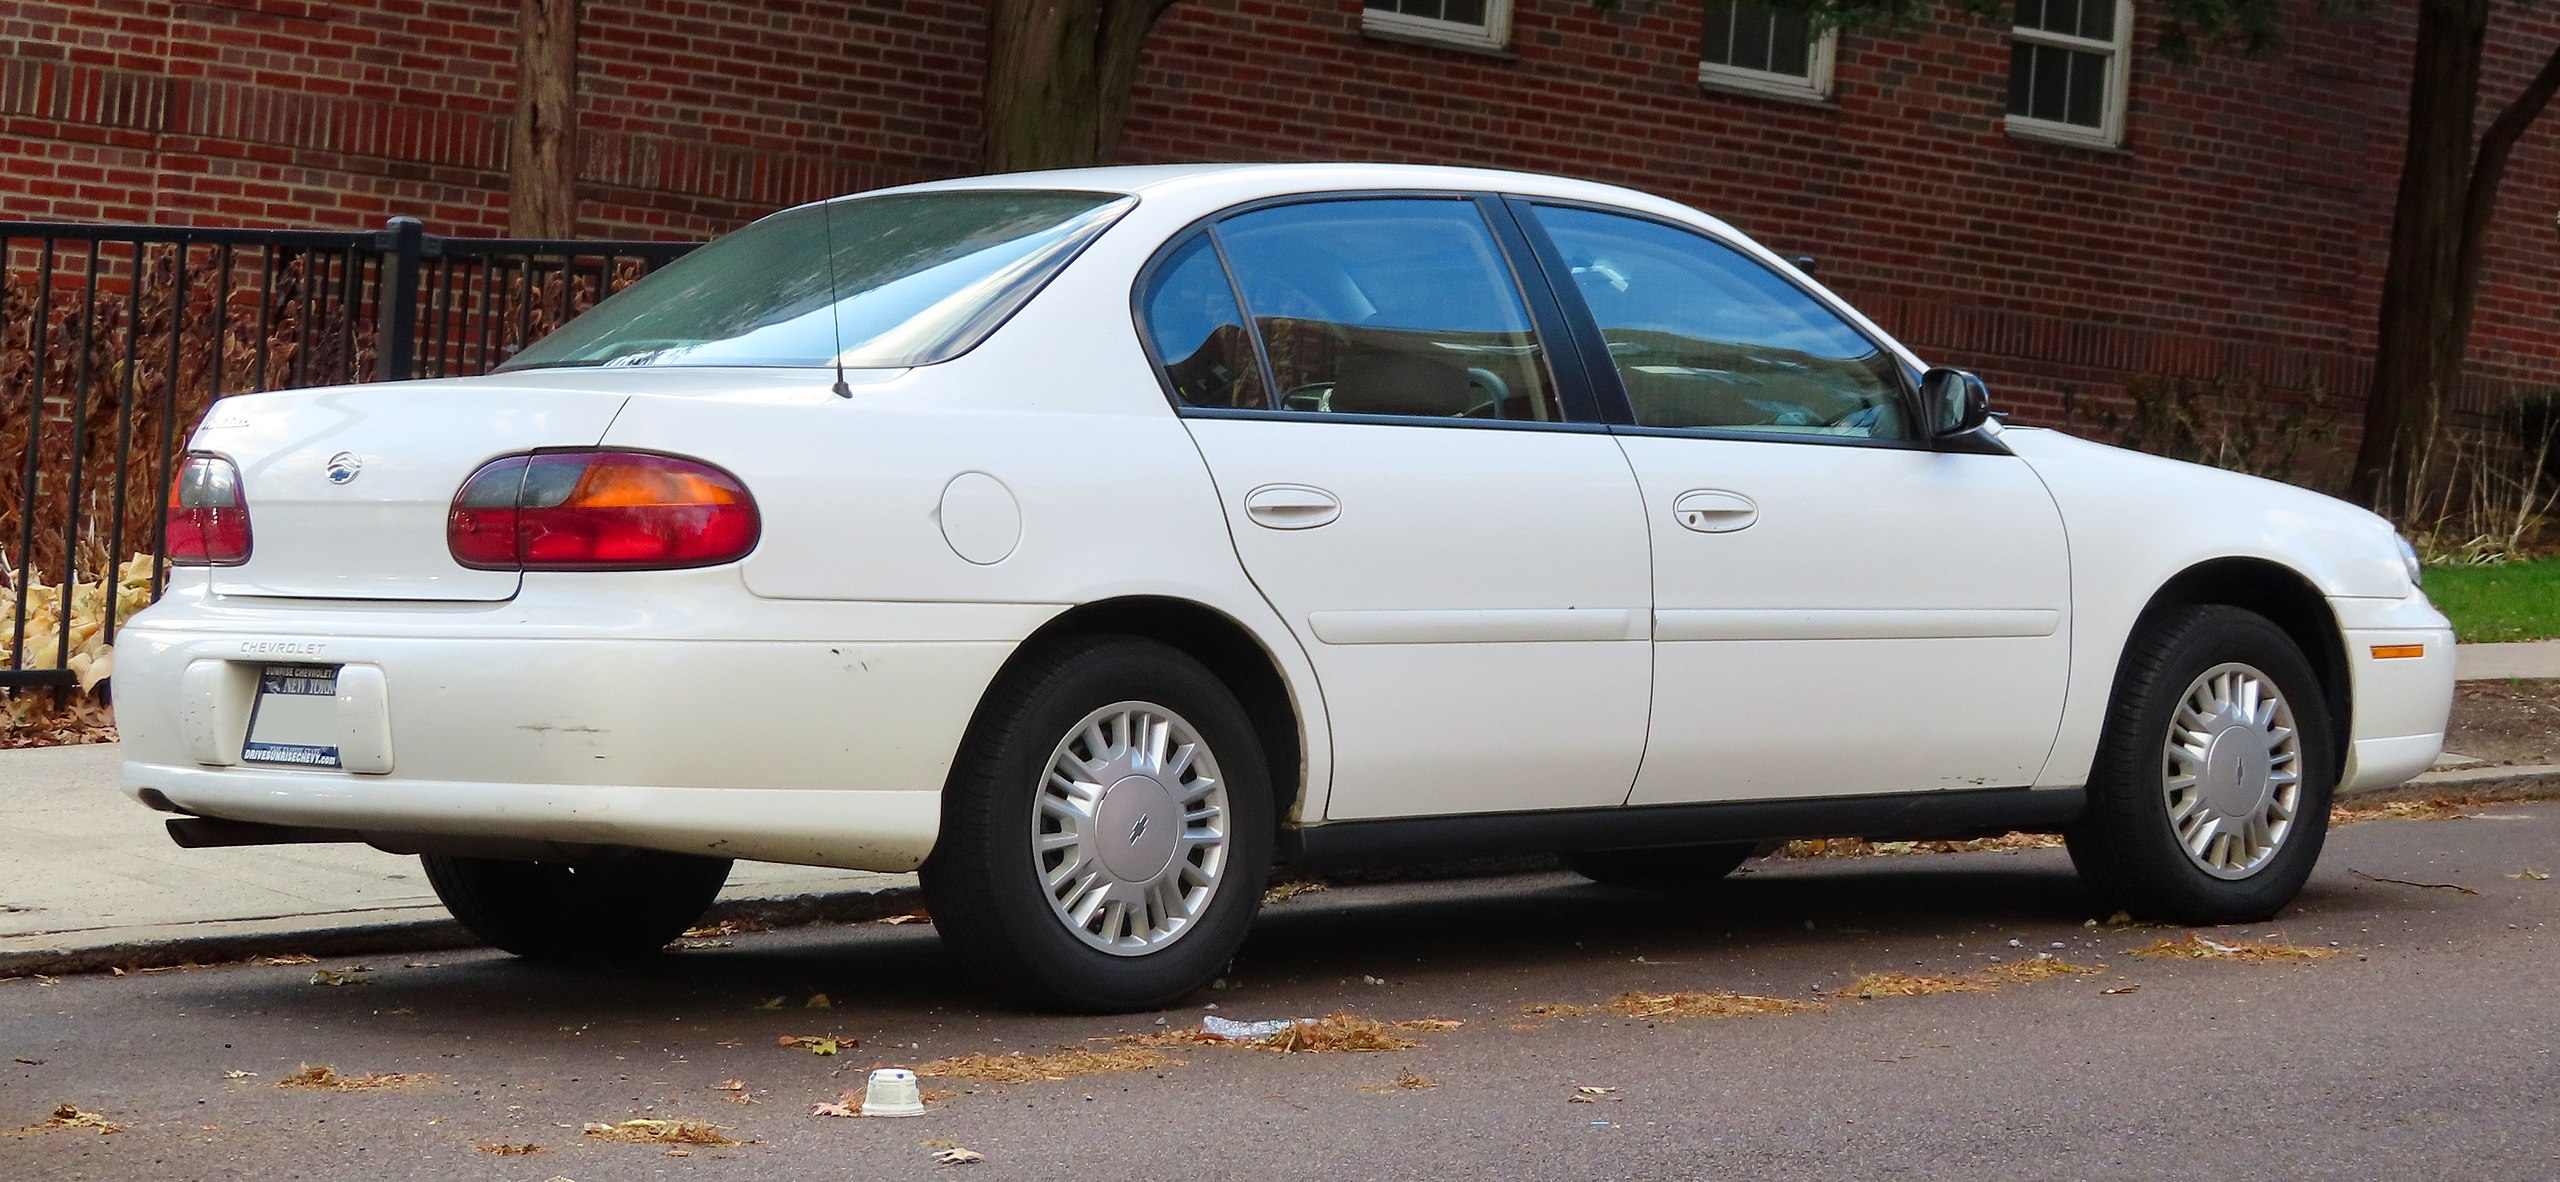 File:2003 Chevrolet Malibu, rear 11.27.19.jpg - Wikimedia Commons